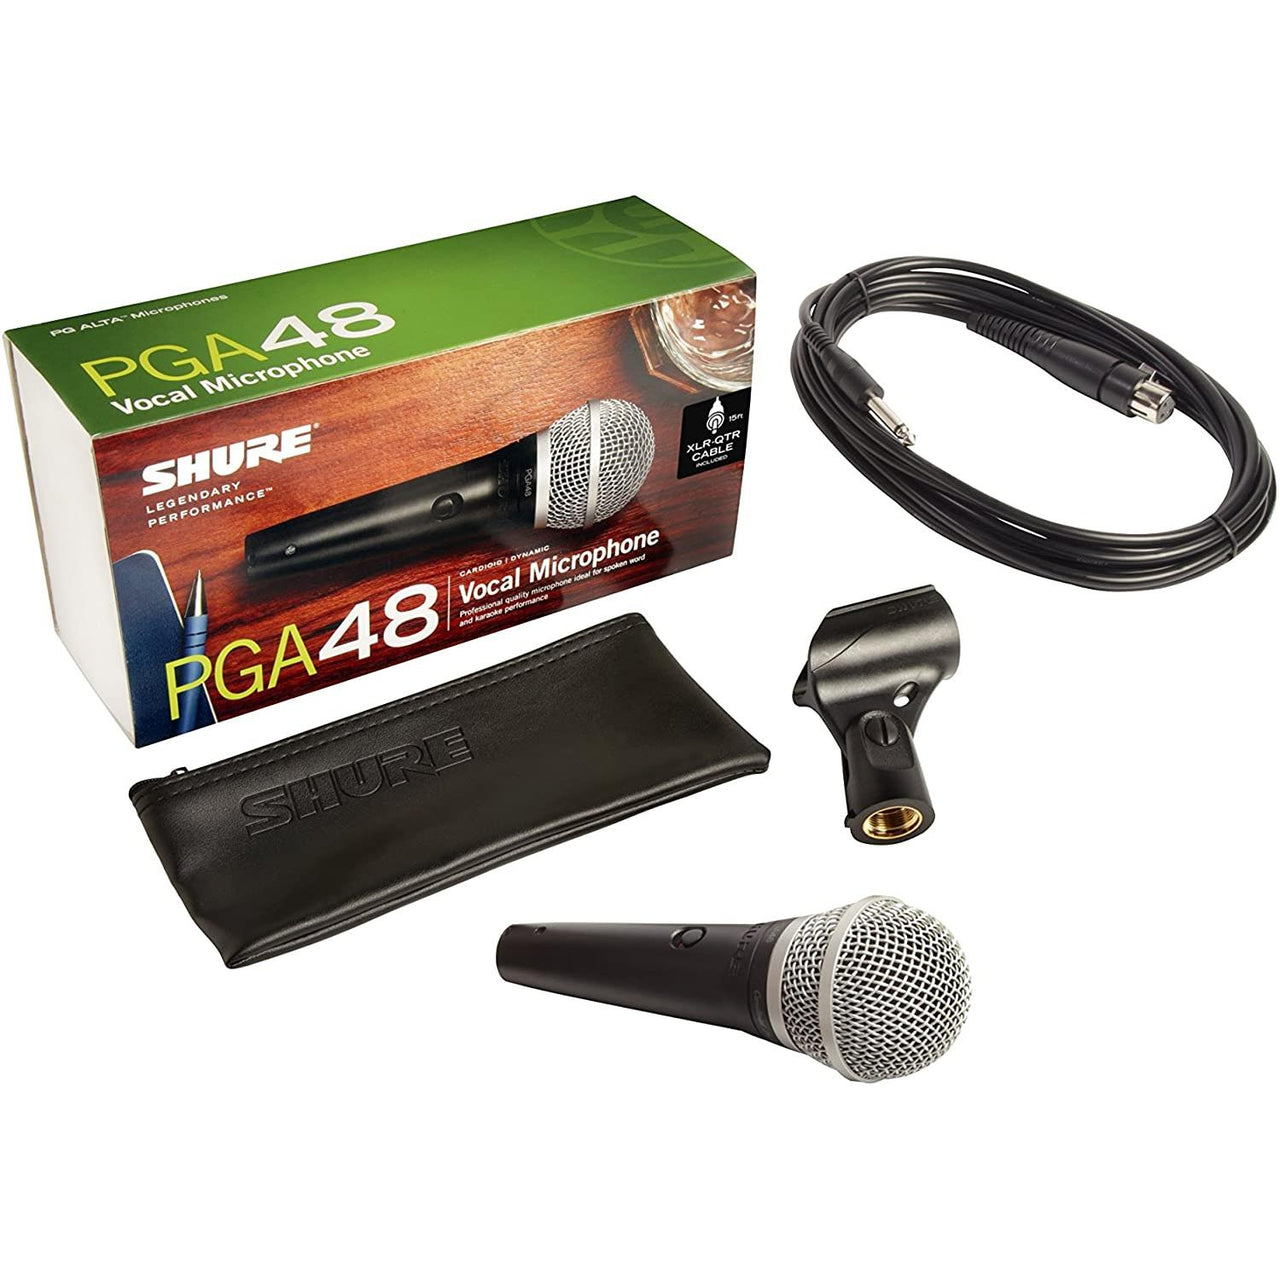 Microfono Shure Bobina Movil C/Cable, Pga48-Qtr